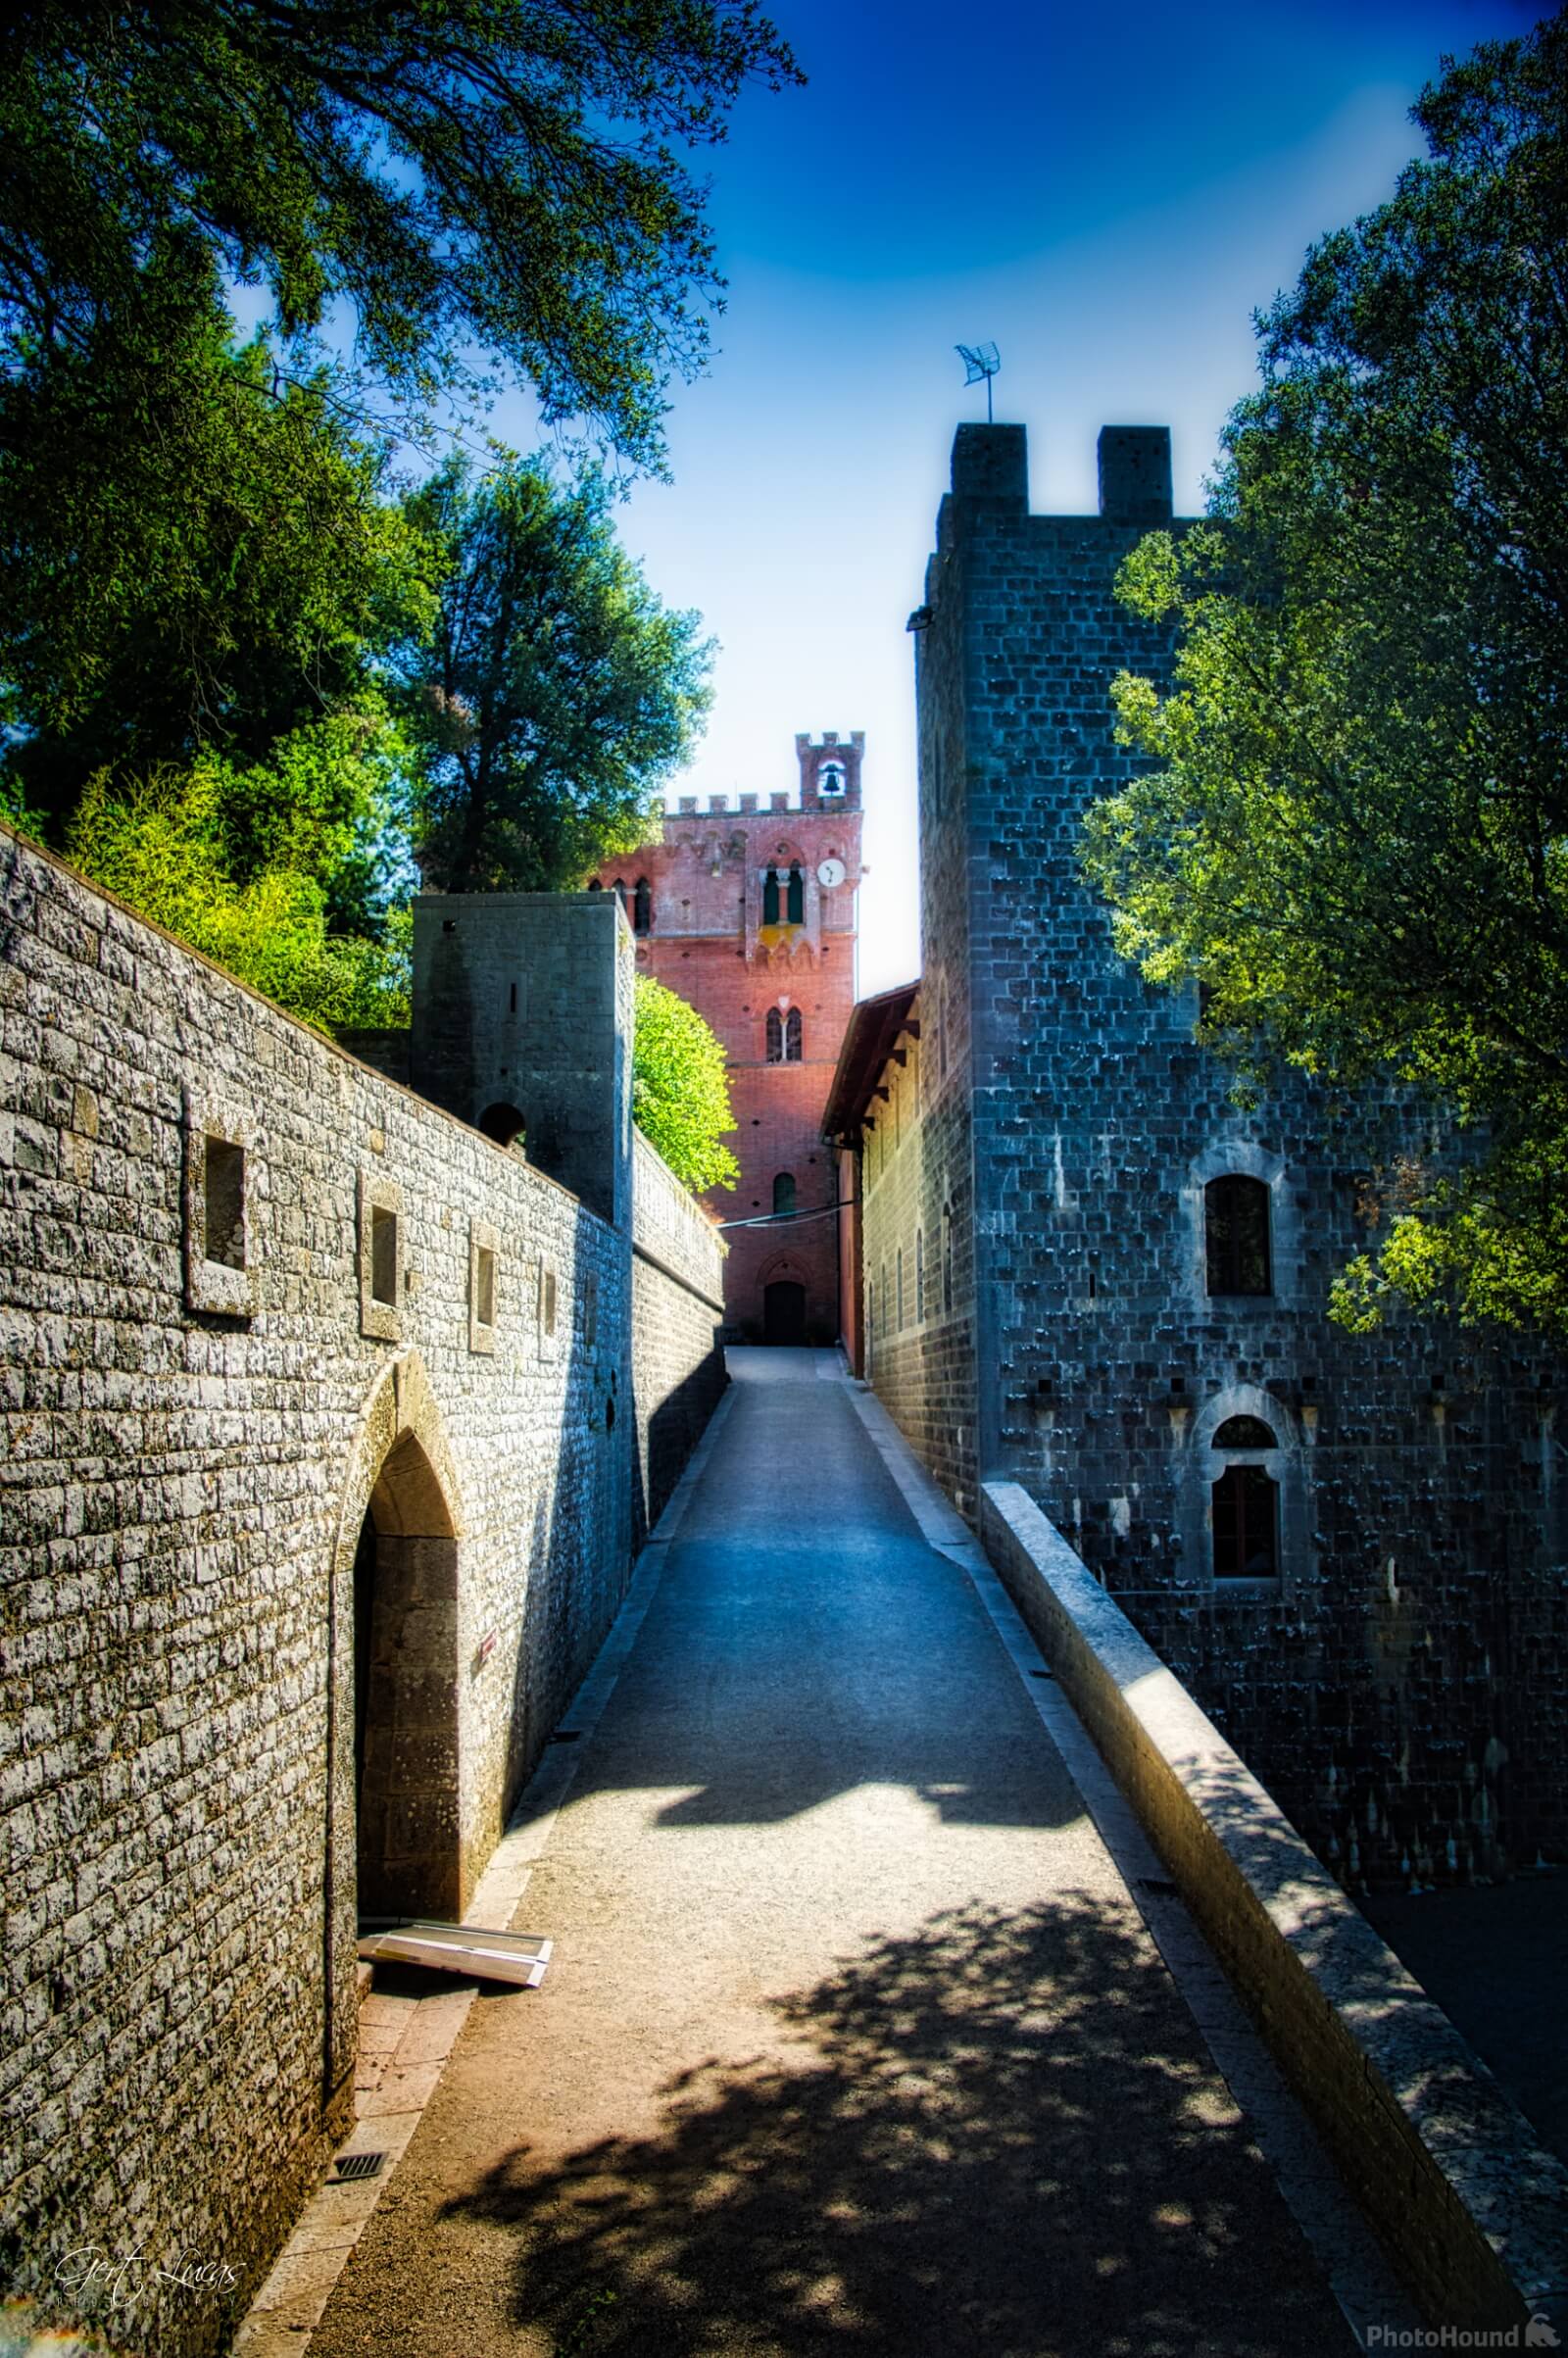 Image of Castello Di Brolio, Chianti by Gert Lucas